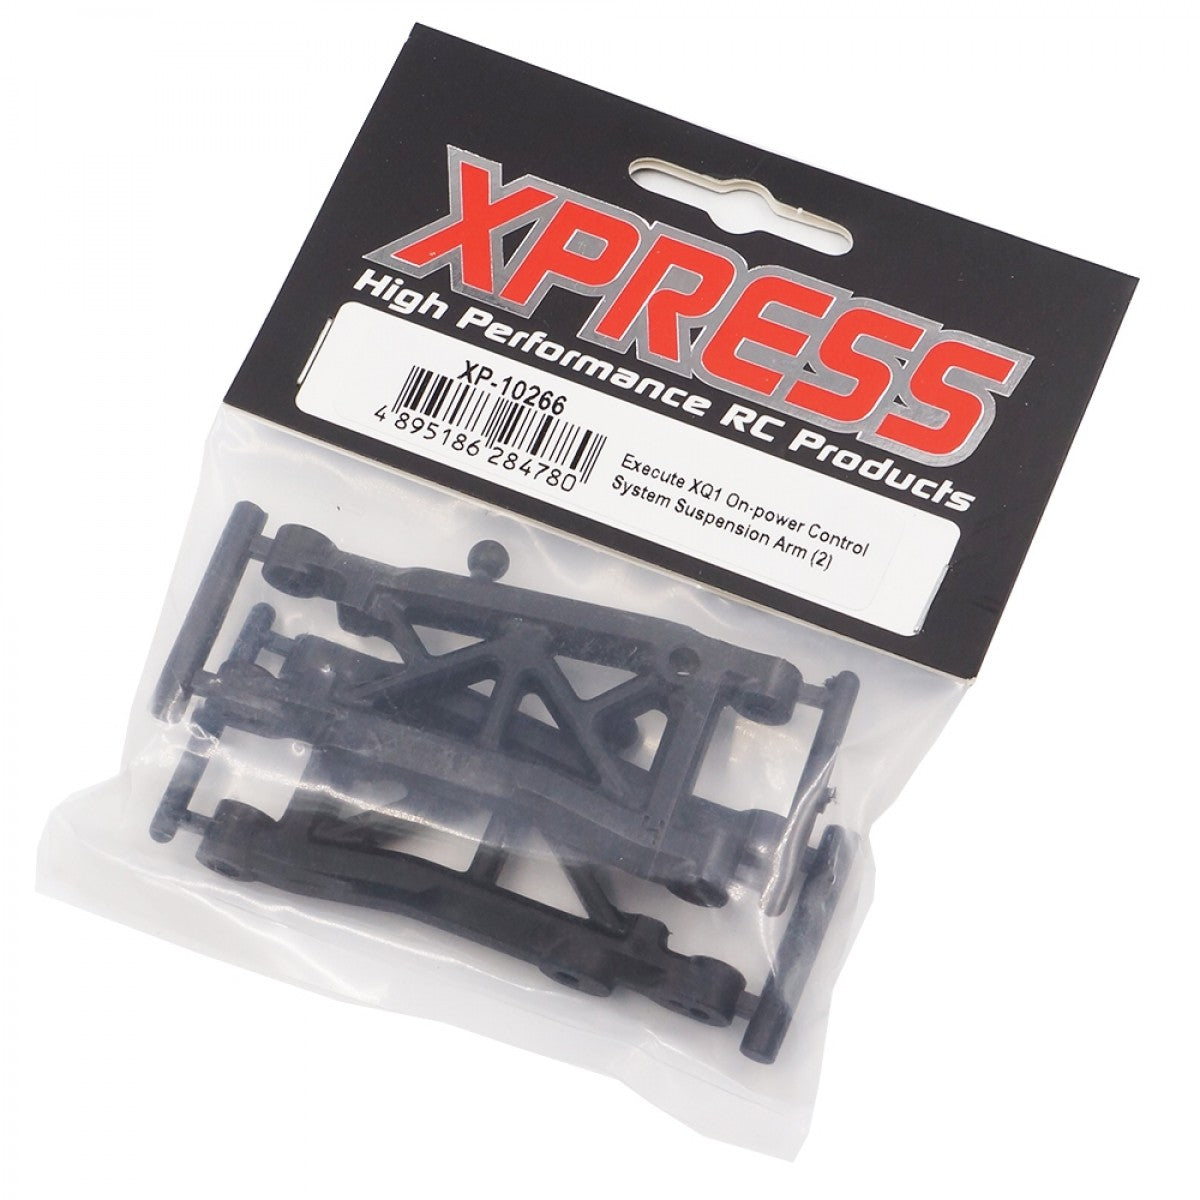 Xpress XP-10266 XQ1 On-power Control (XOC) Suspension Arms (pair)